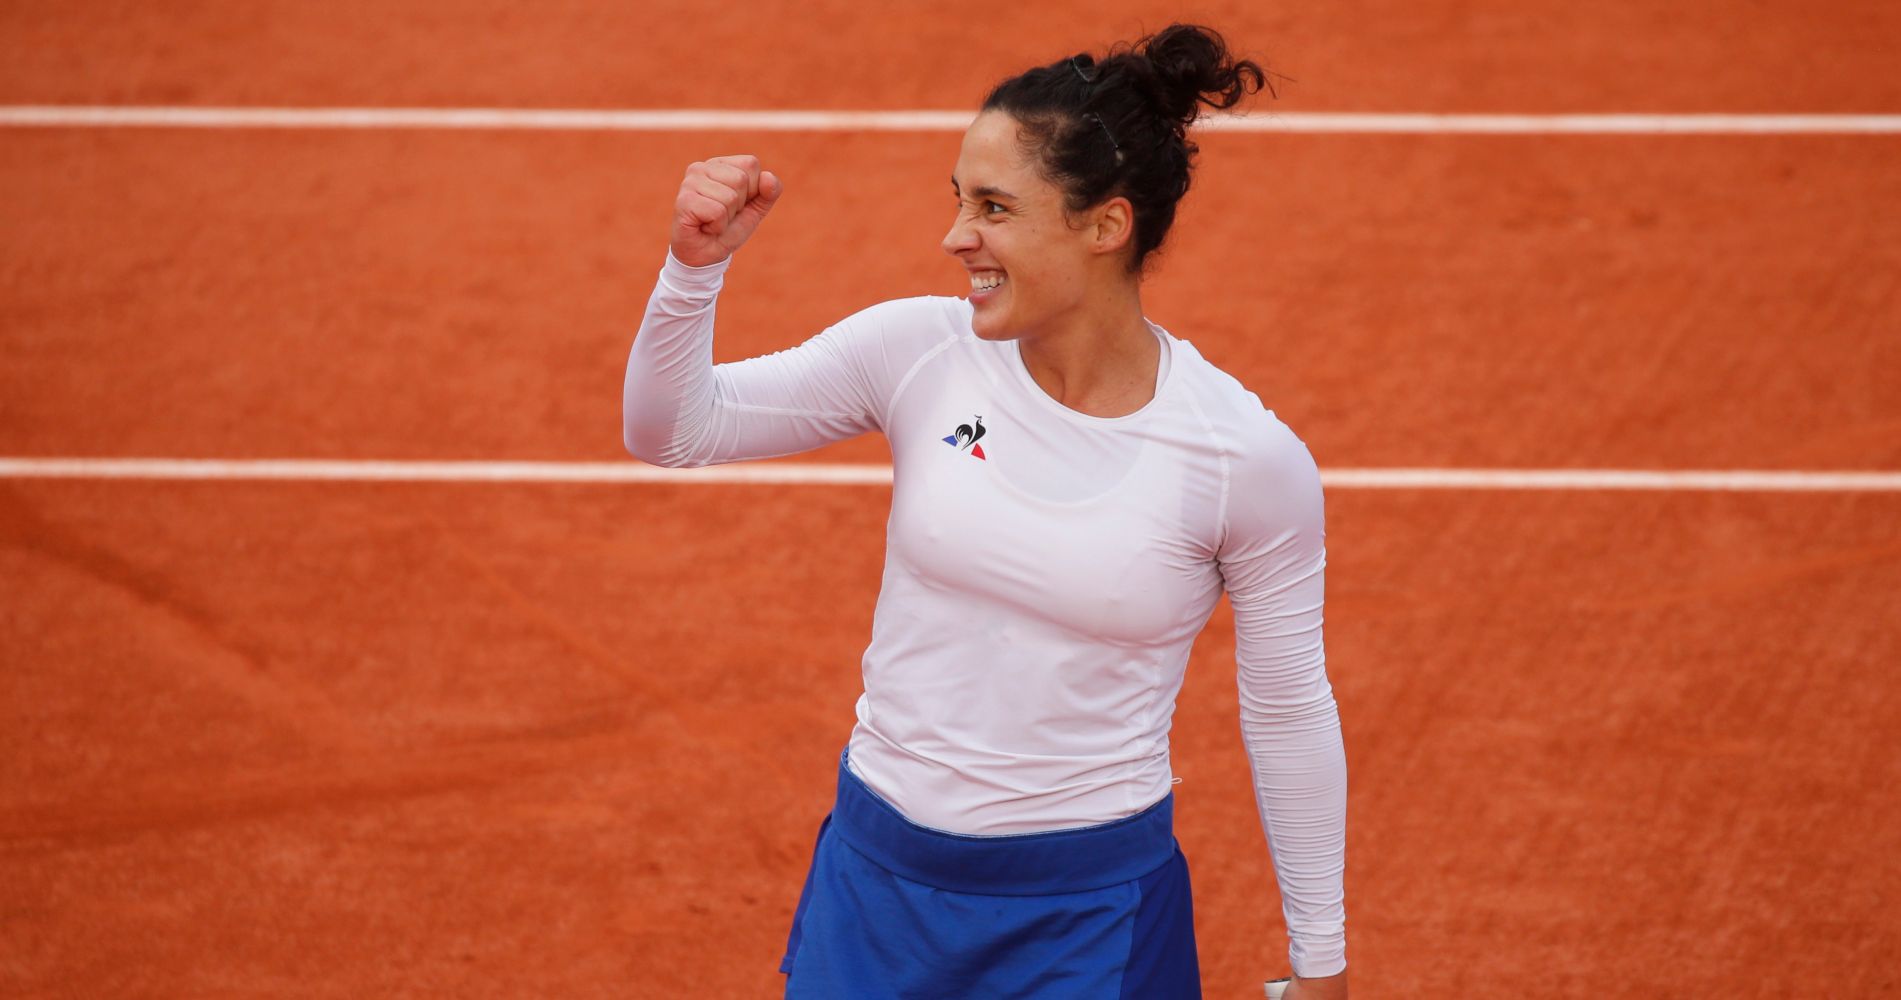 Martina Trevisan celebrates during her fourth round match at Roland-Garros 2020